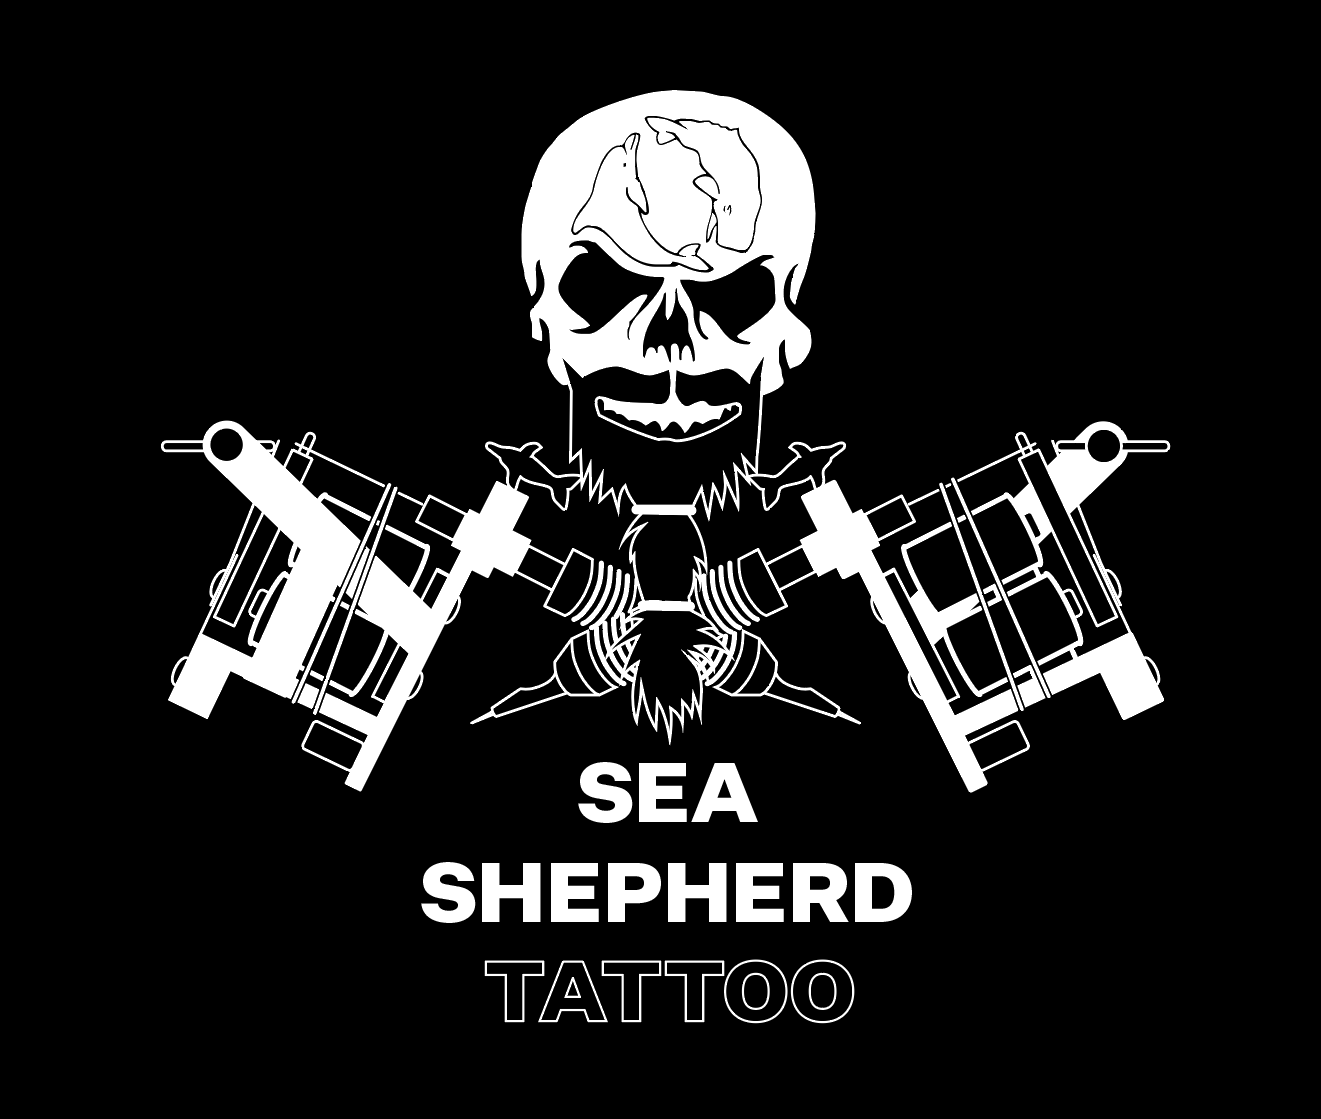 SEA SHEPHERD Tattoo